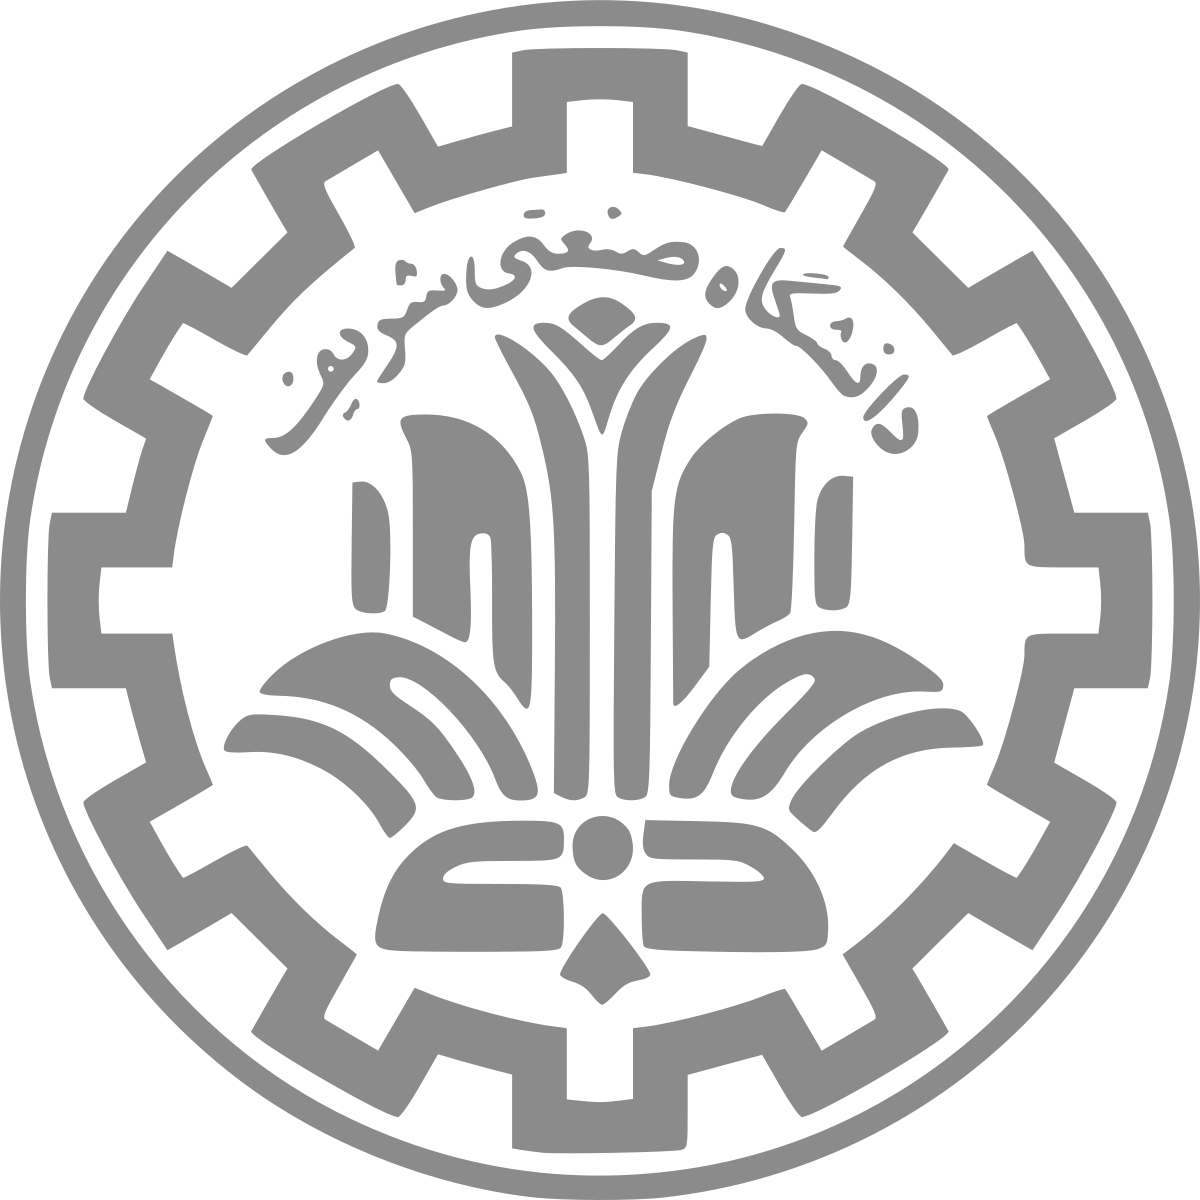 University of Tehran logo 1 2